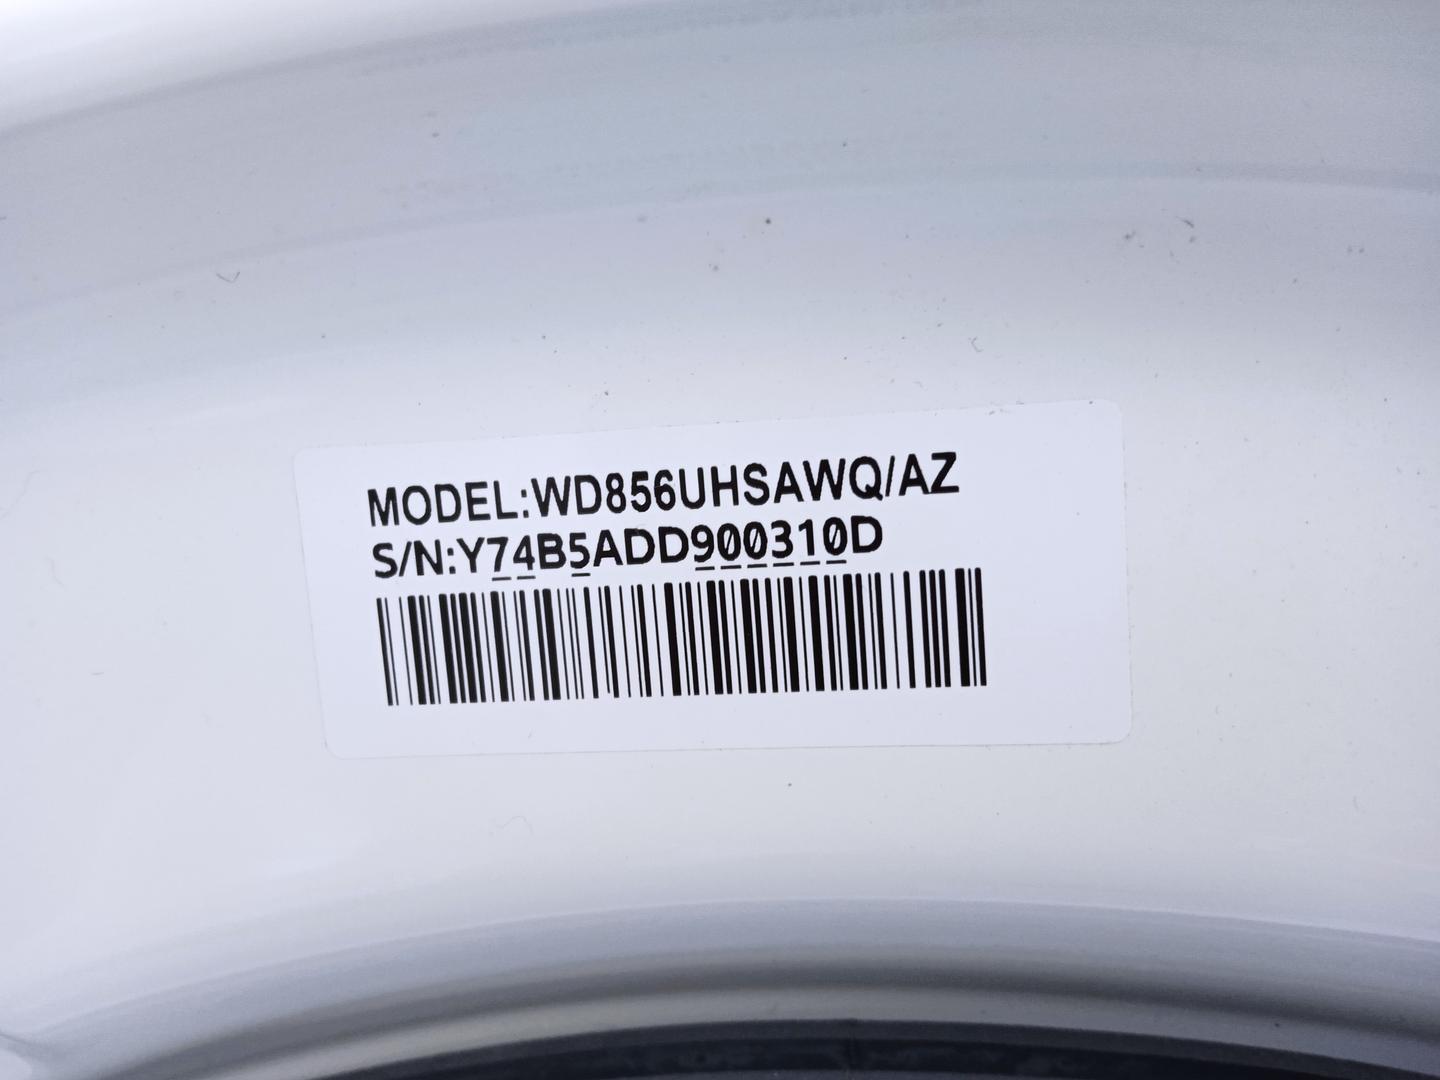 Máquina de lavar roupas Samsung WD856UHSAWQ/AZ em Aço Branco 86 cm x 60 cm x 62 cm